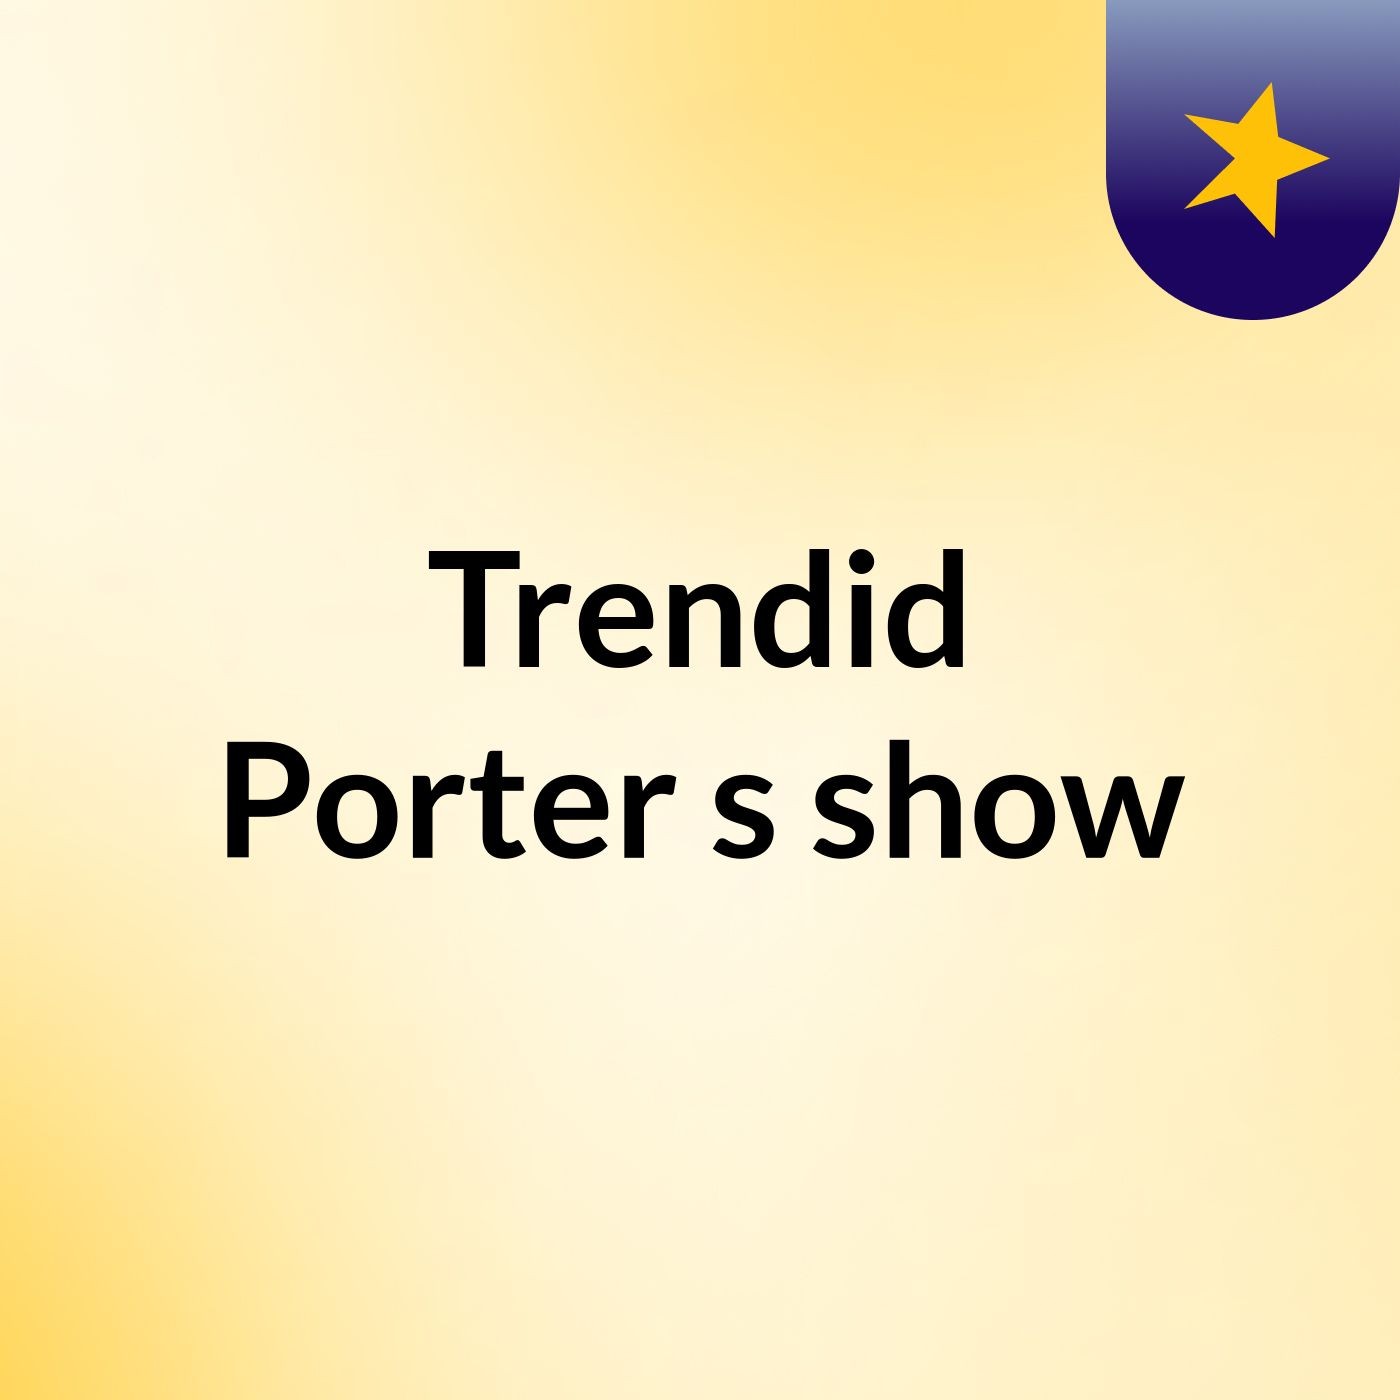 Trendid Porter's show